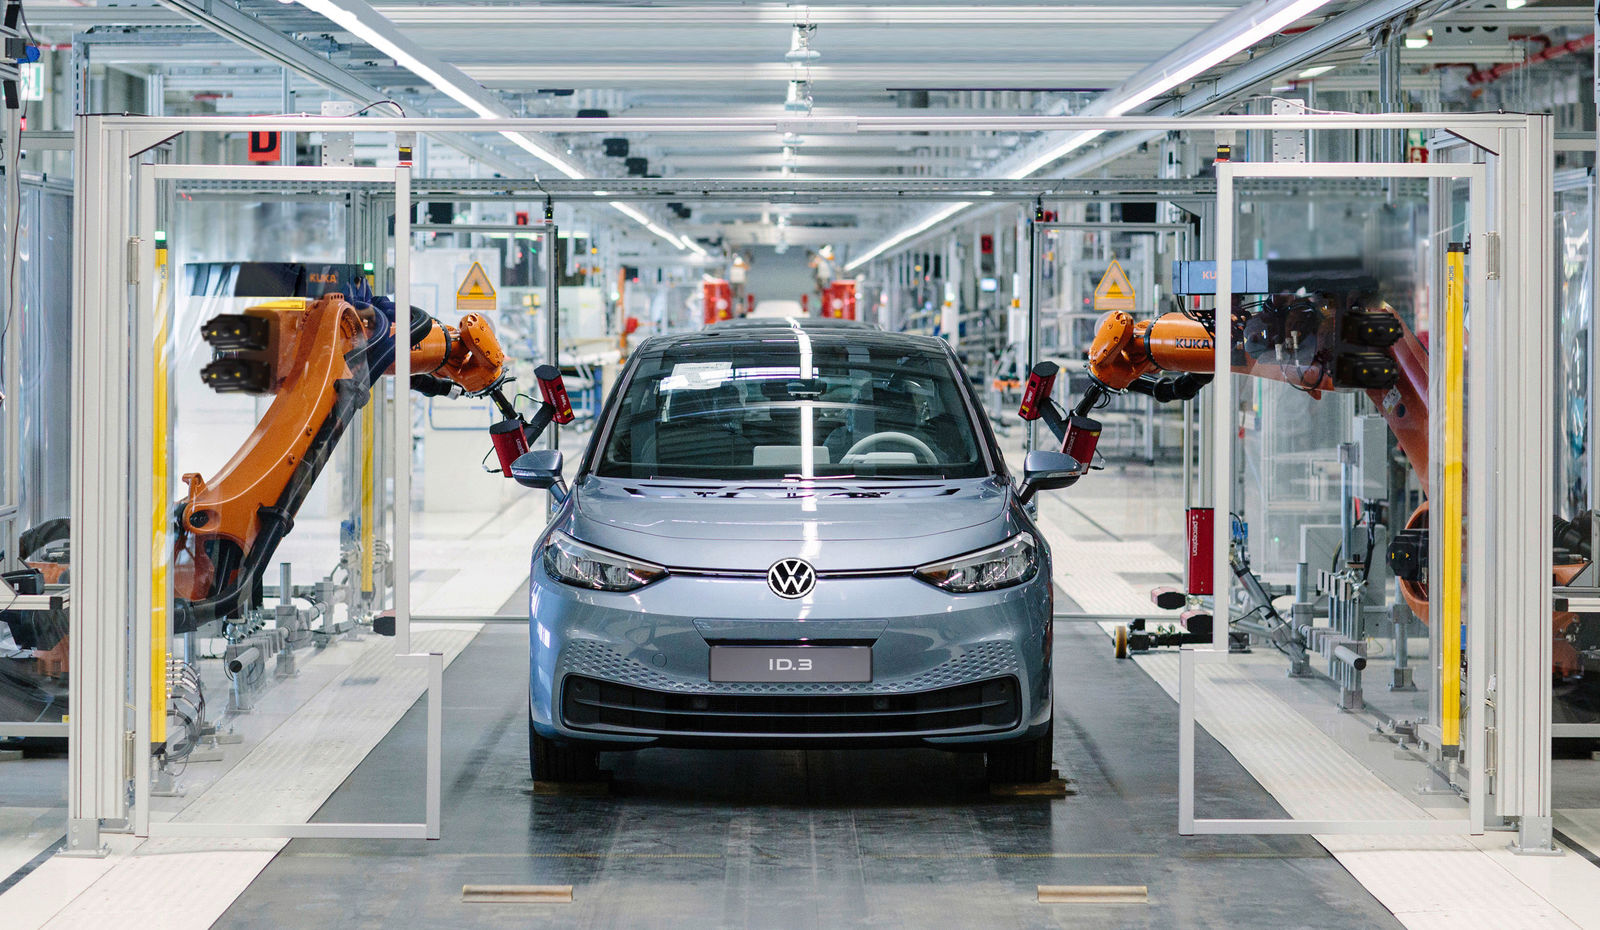 Production start of Volkswagen ID.3